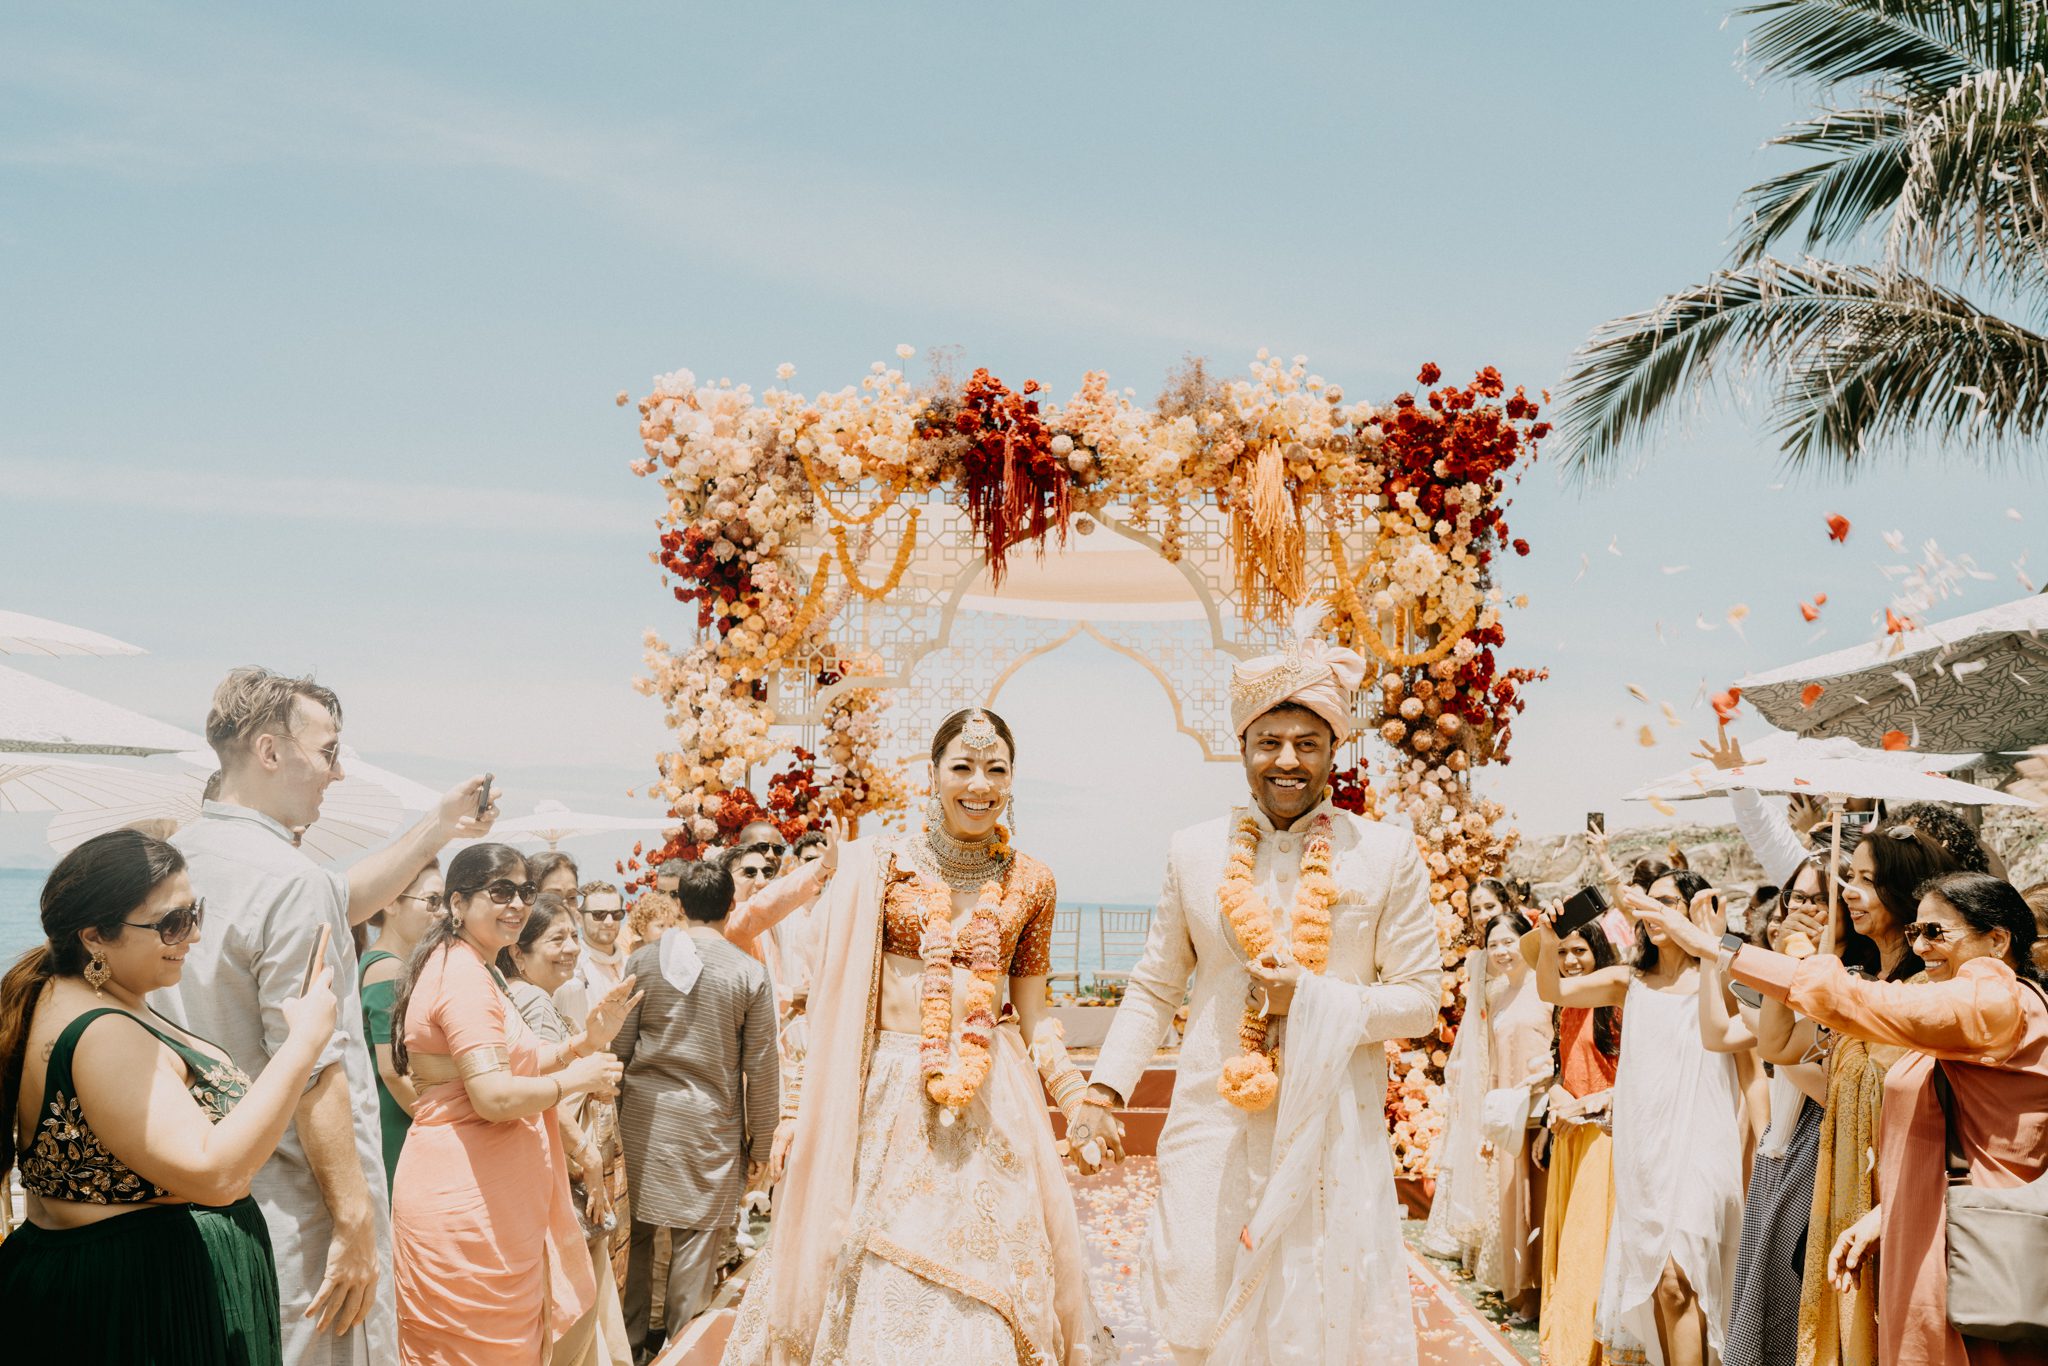 A vibrant Indian wedding